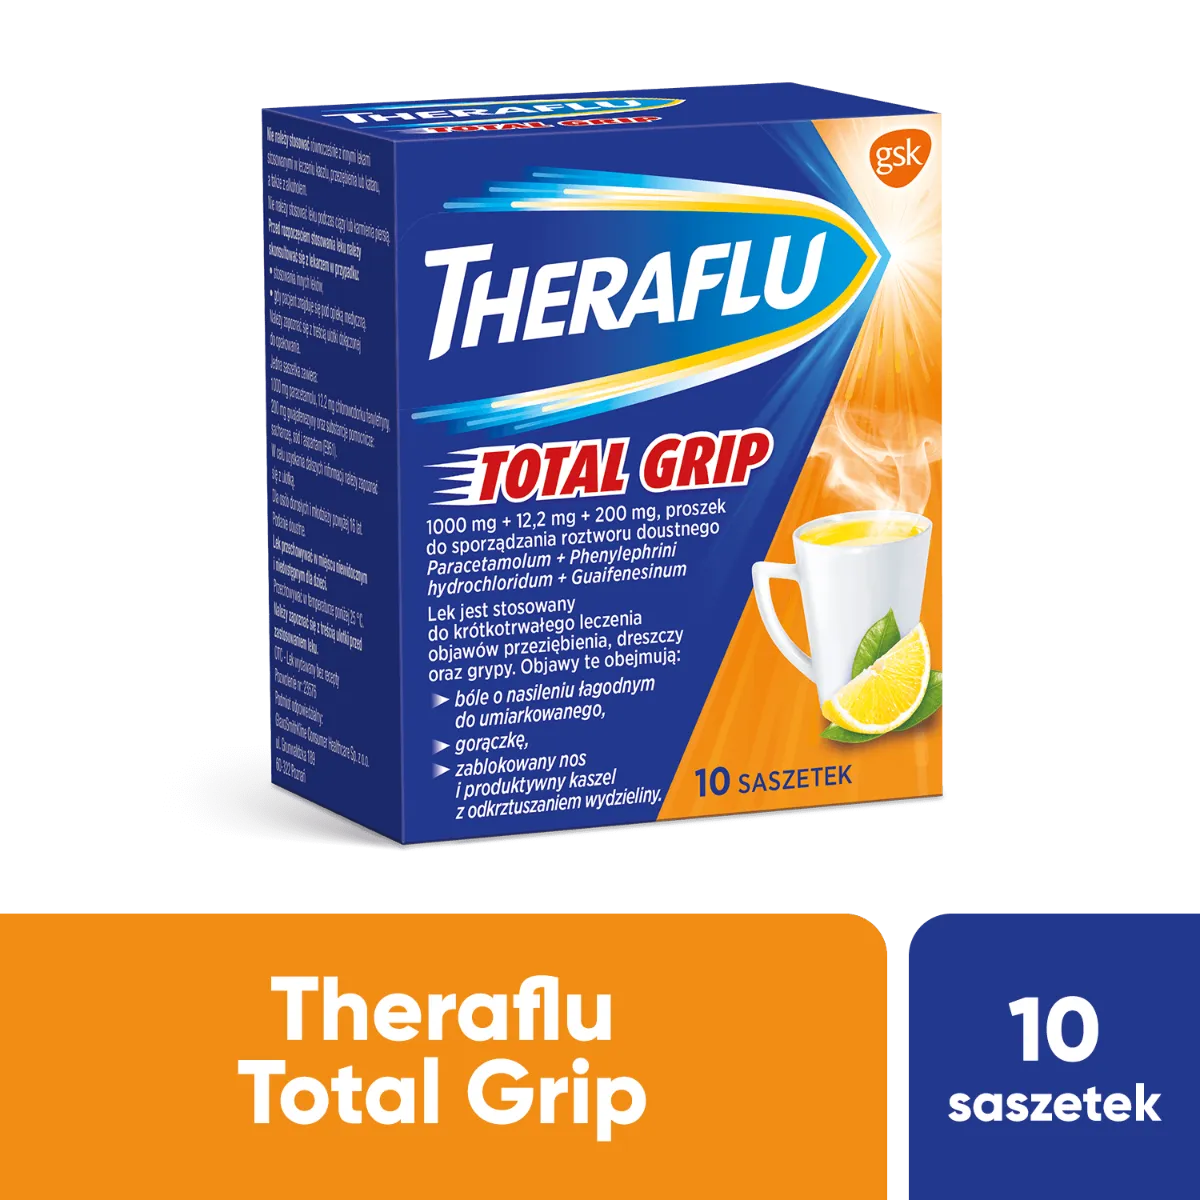 Theraflu Total Grip, 1000 mg + 12,2 mg + 200 mg, 10 saszetek 